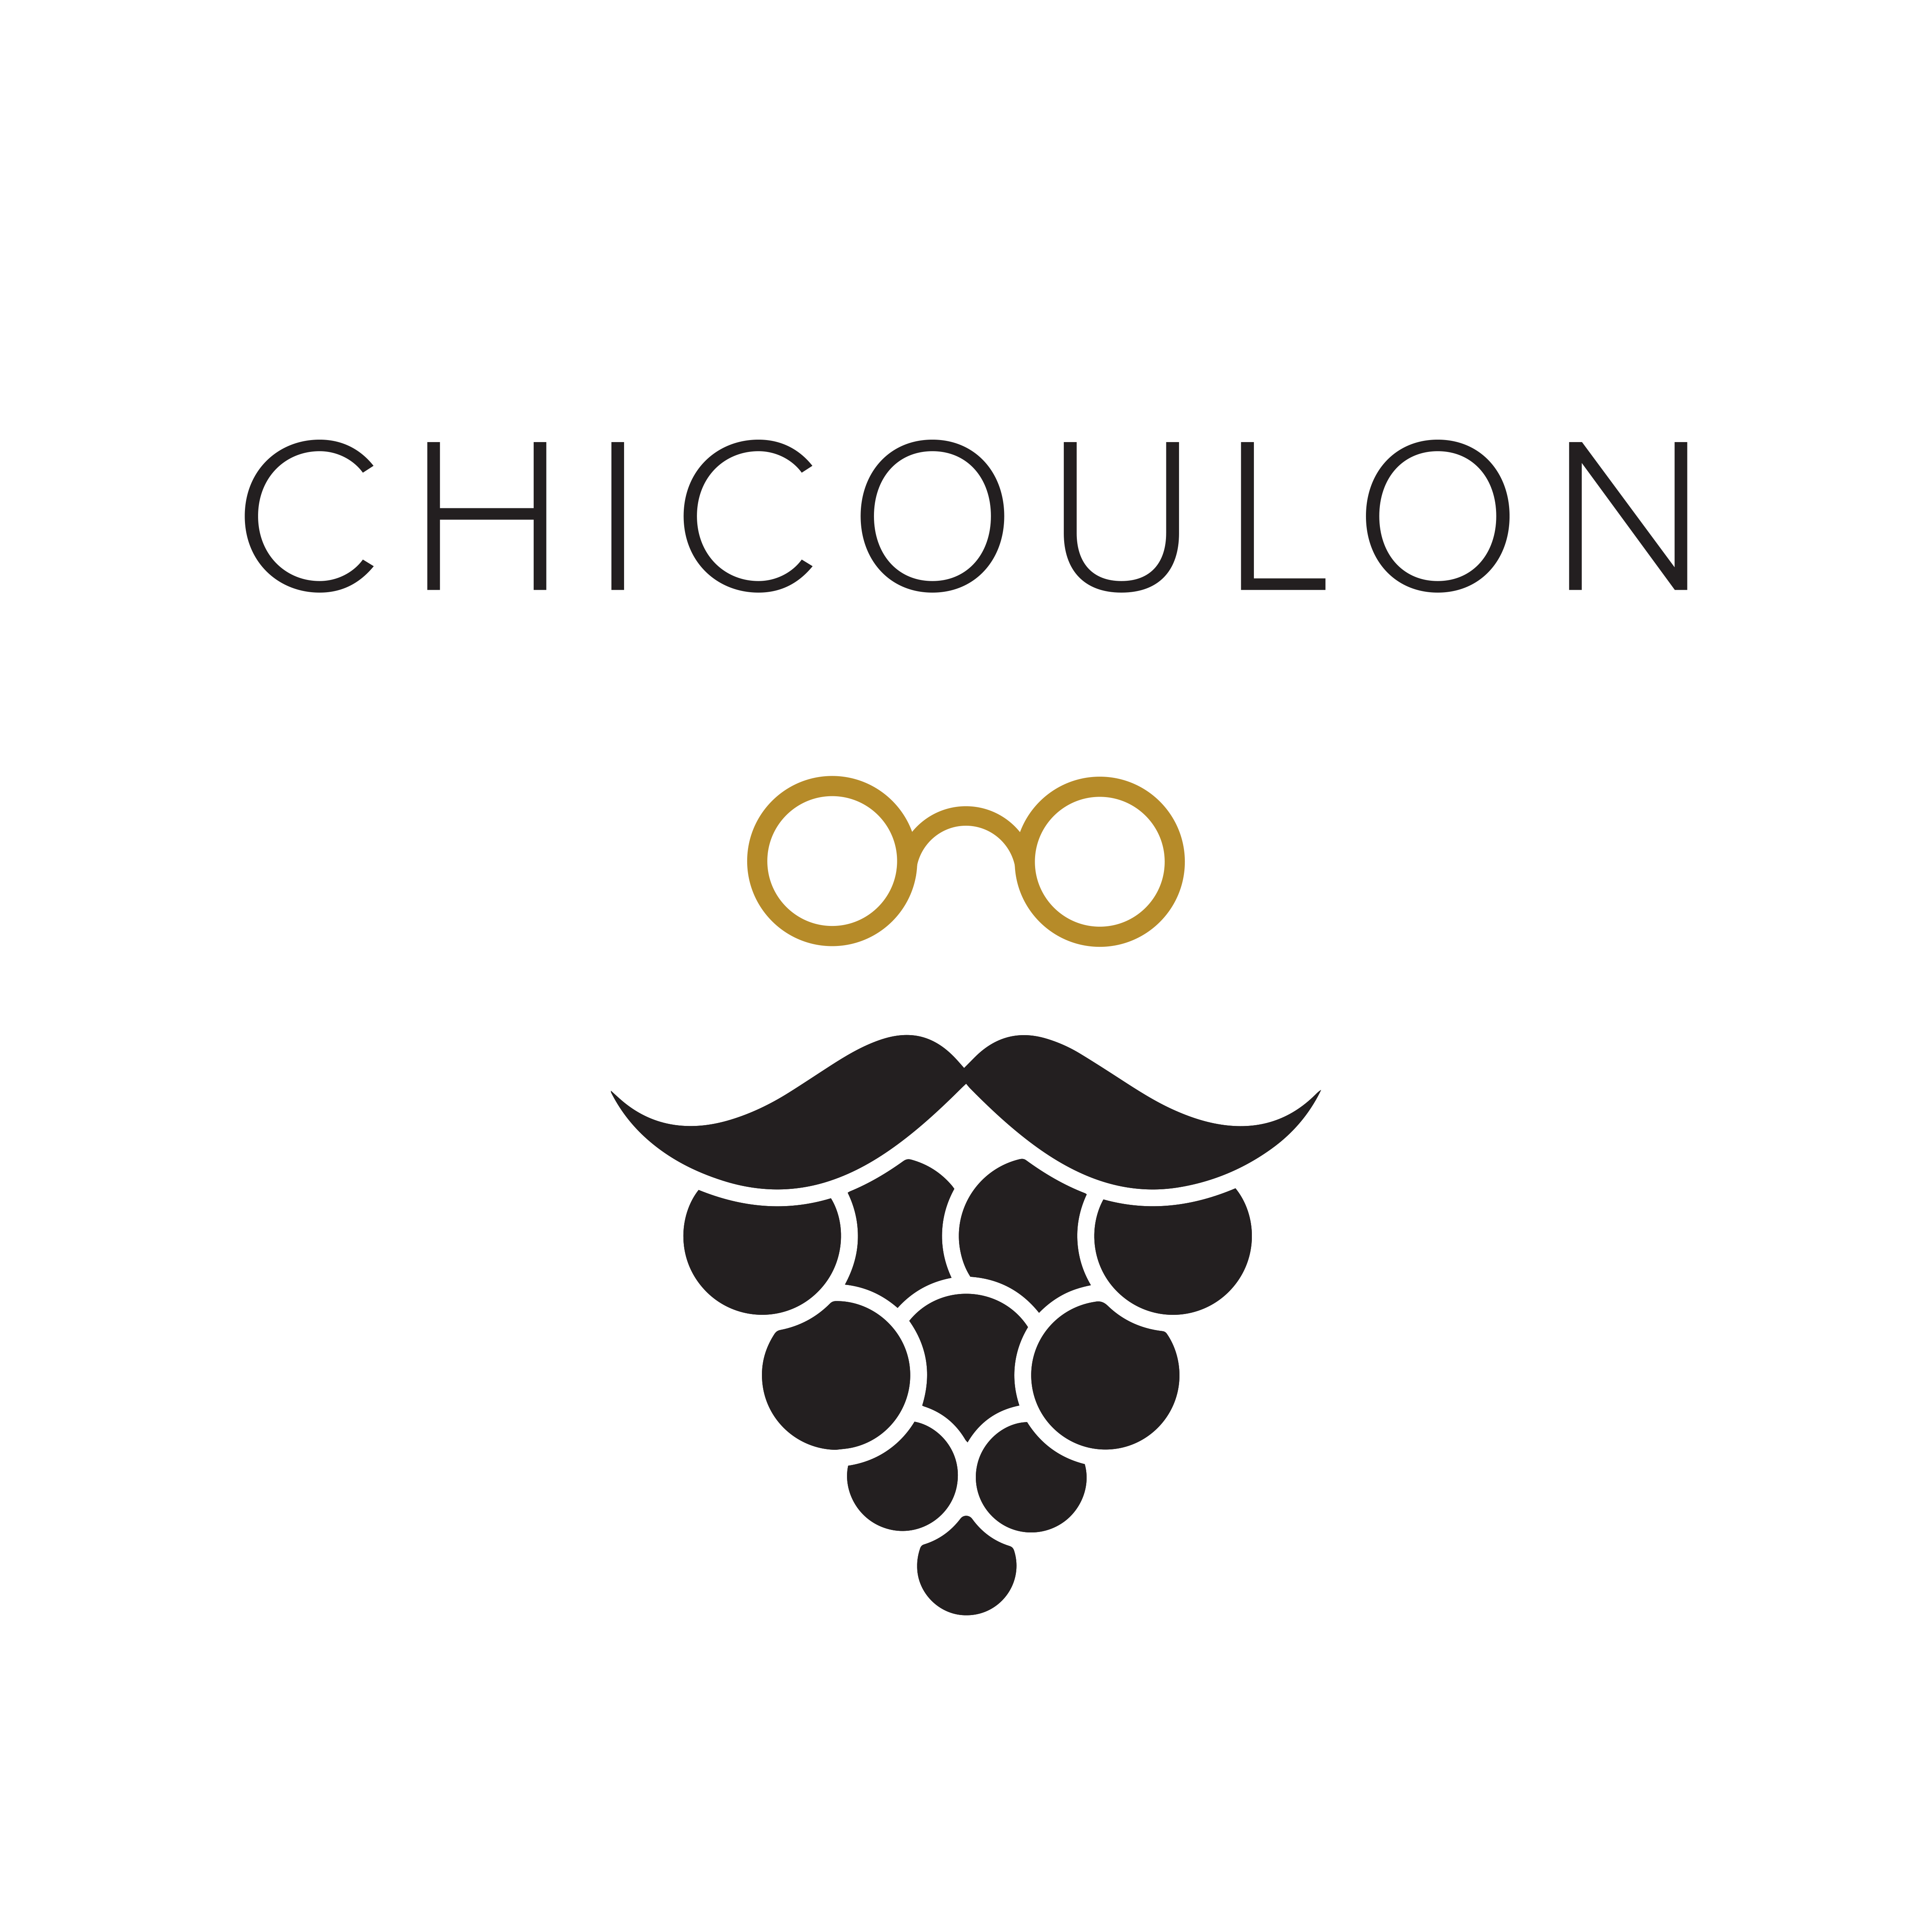 Chicoulon